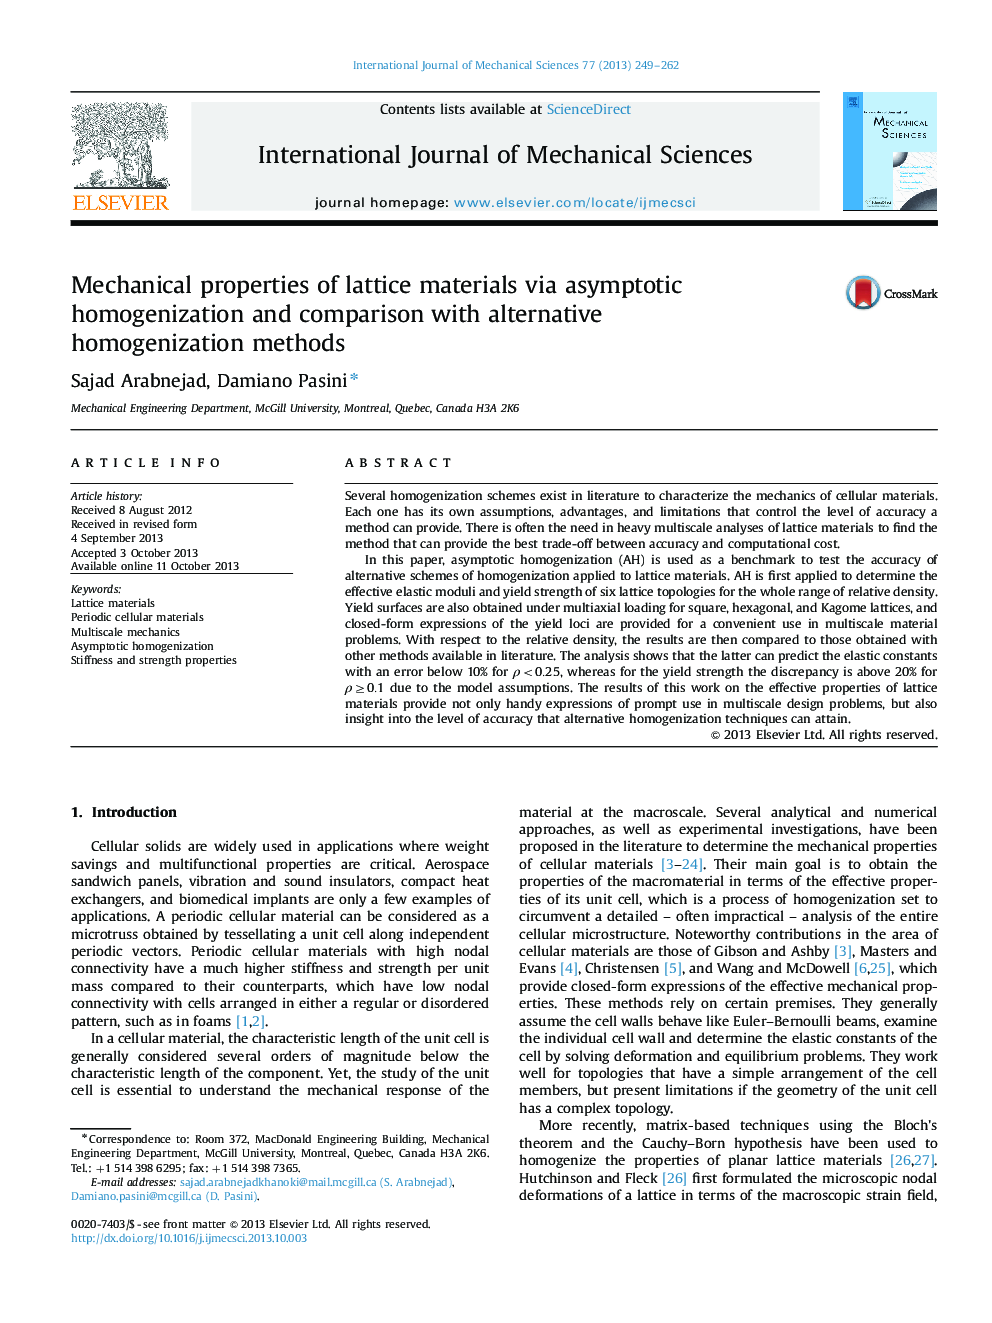 Mechanical properties of lattice materials via asymptotic homogenization and comparison with alternative homogenization methods